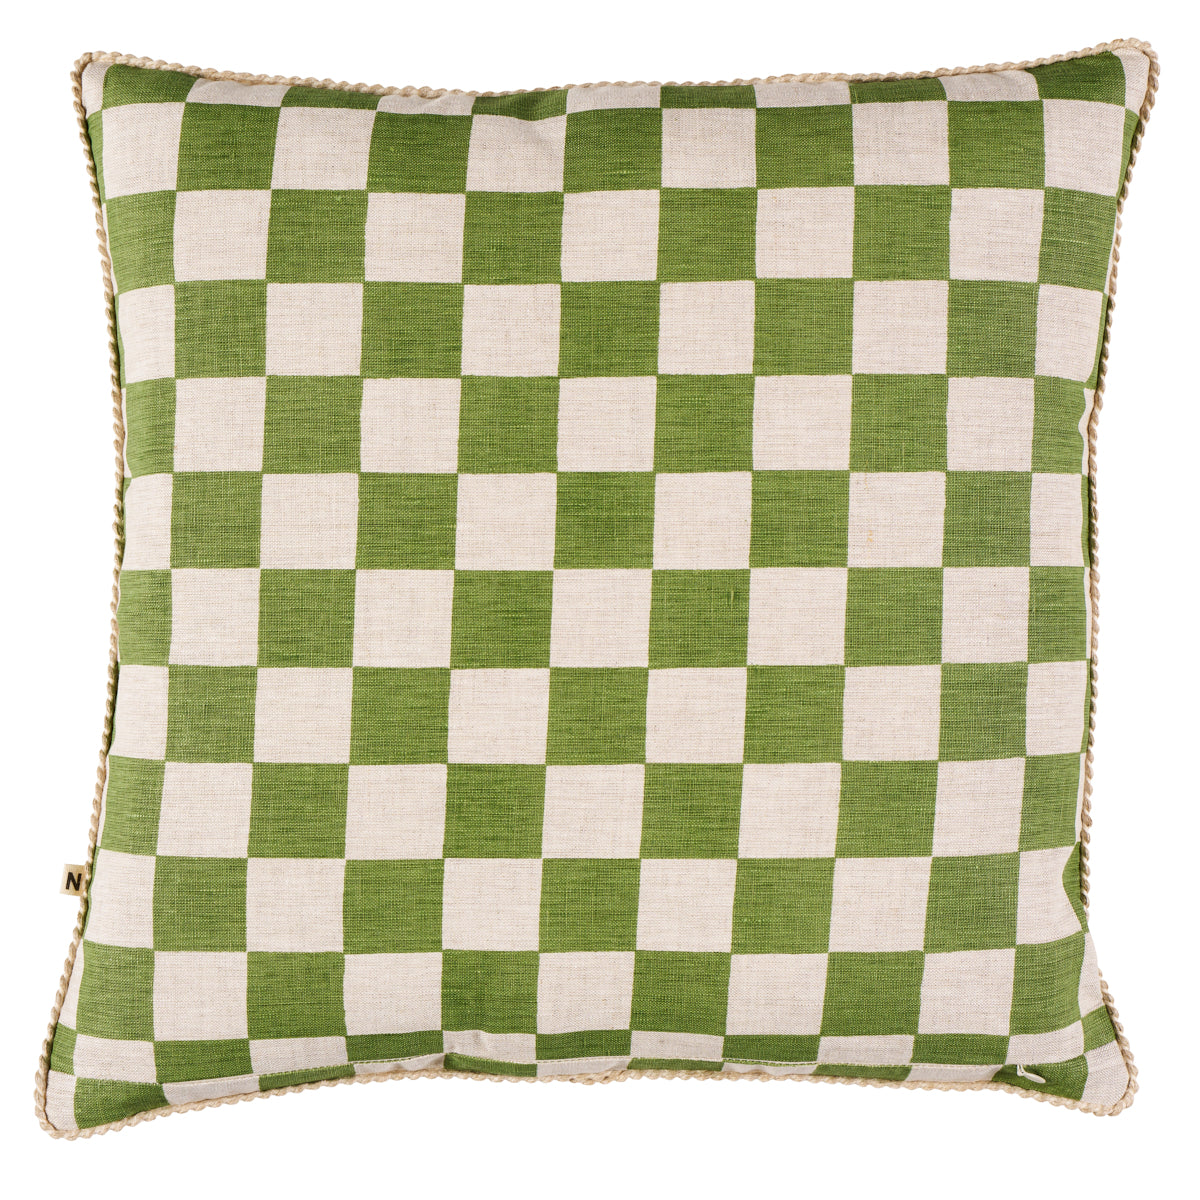 Purchase So253005 | Small Checkers 20" Pillow, Thyme - Schumacher Pillows